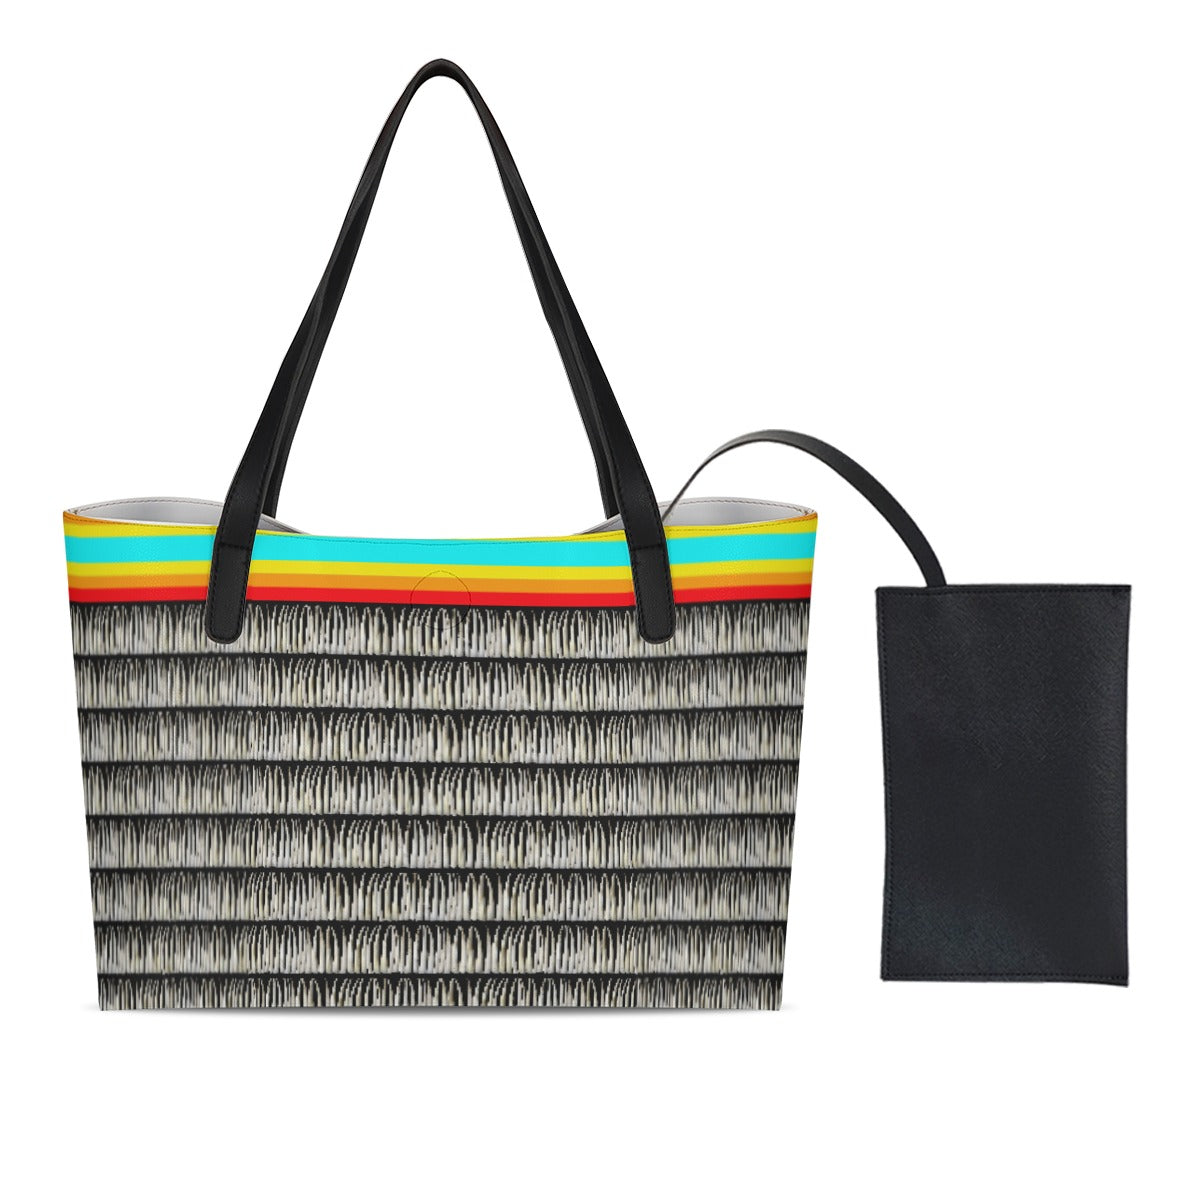 Dentalium on Black Shopping Tote Bag With Black Mini Purse